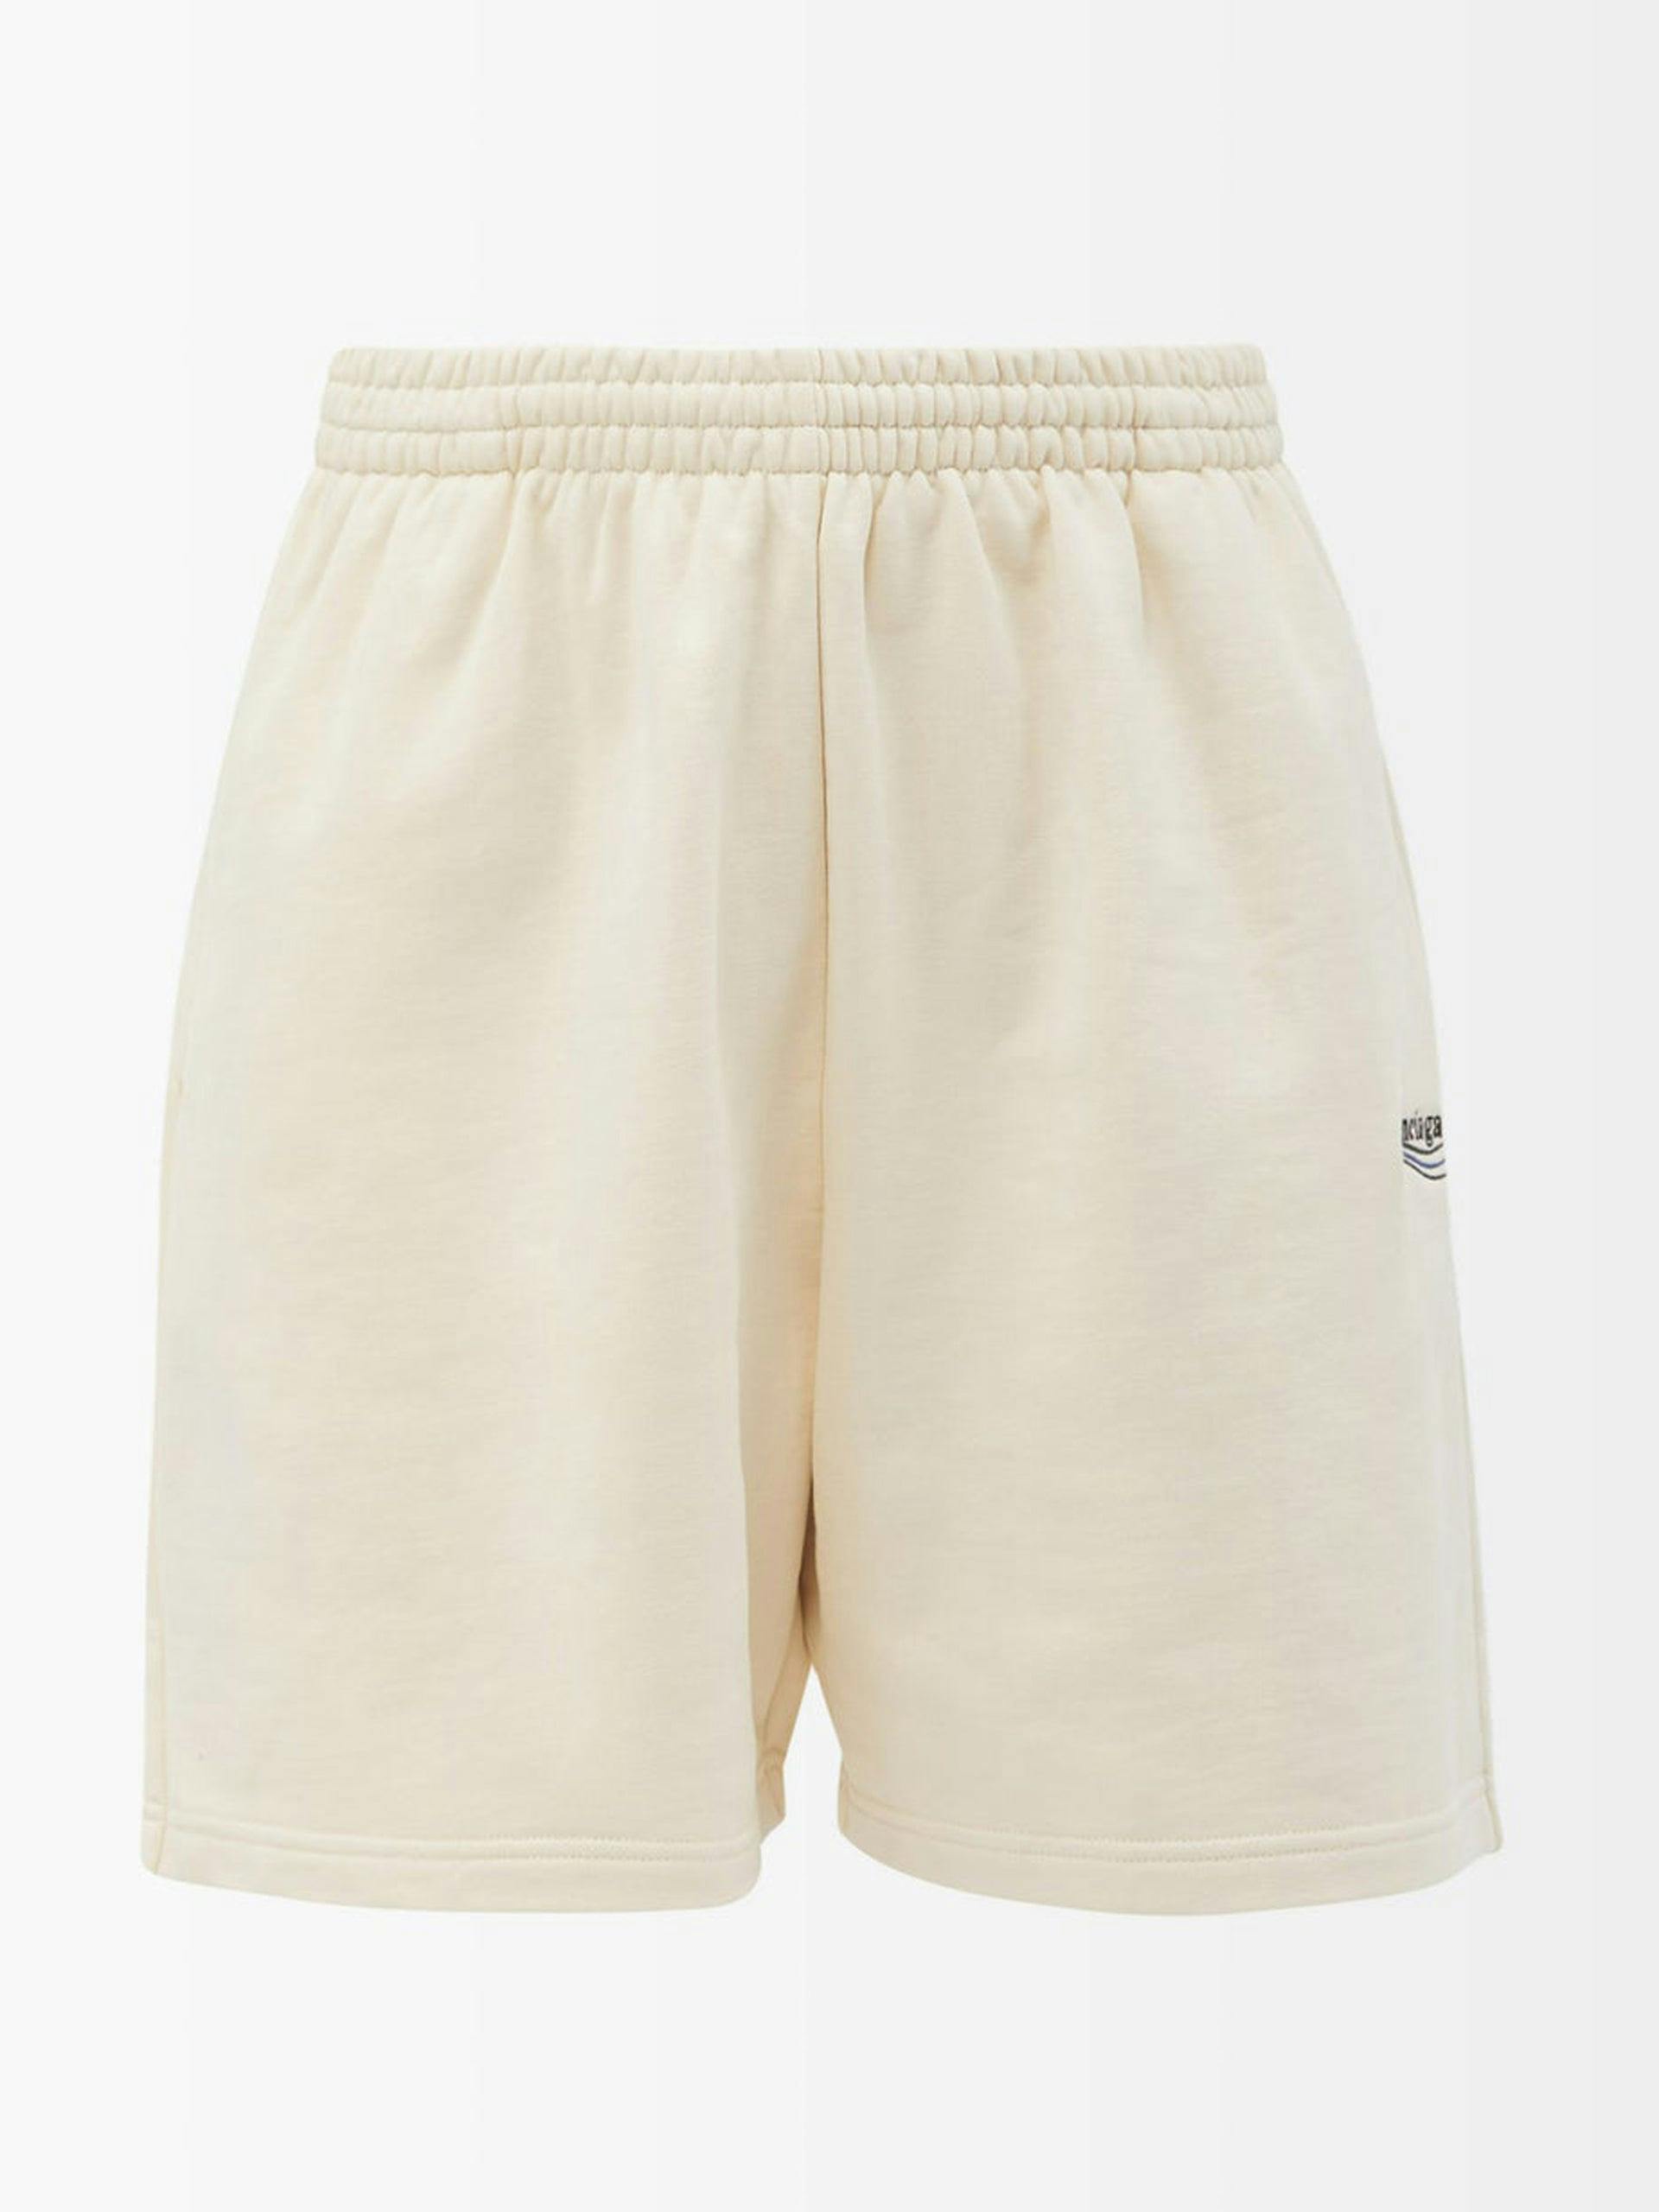 Cream logo shorts